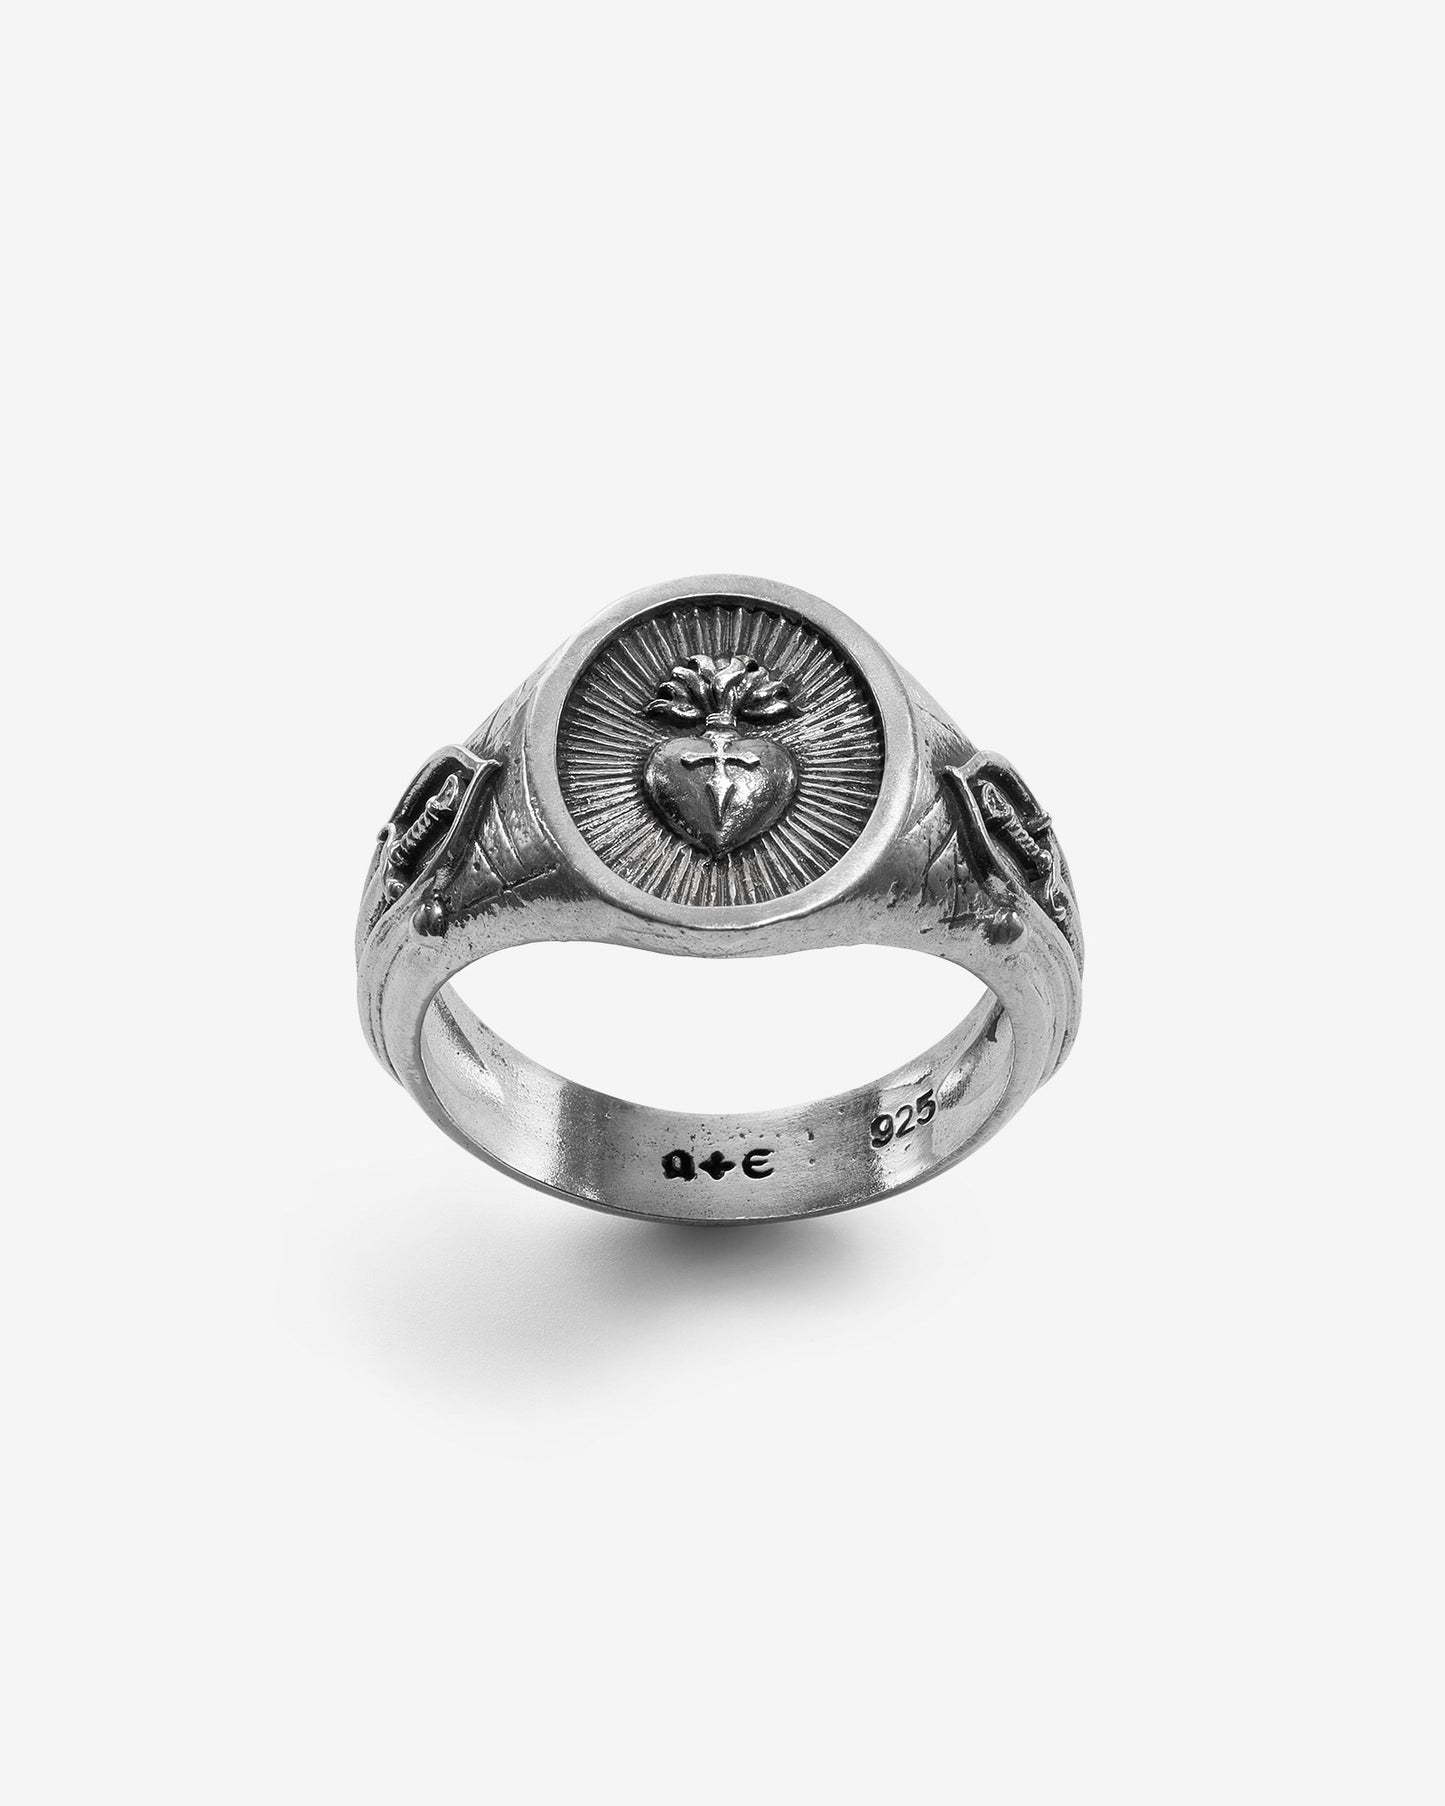 L'anneau de la Sainte-Cène